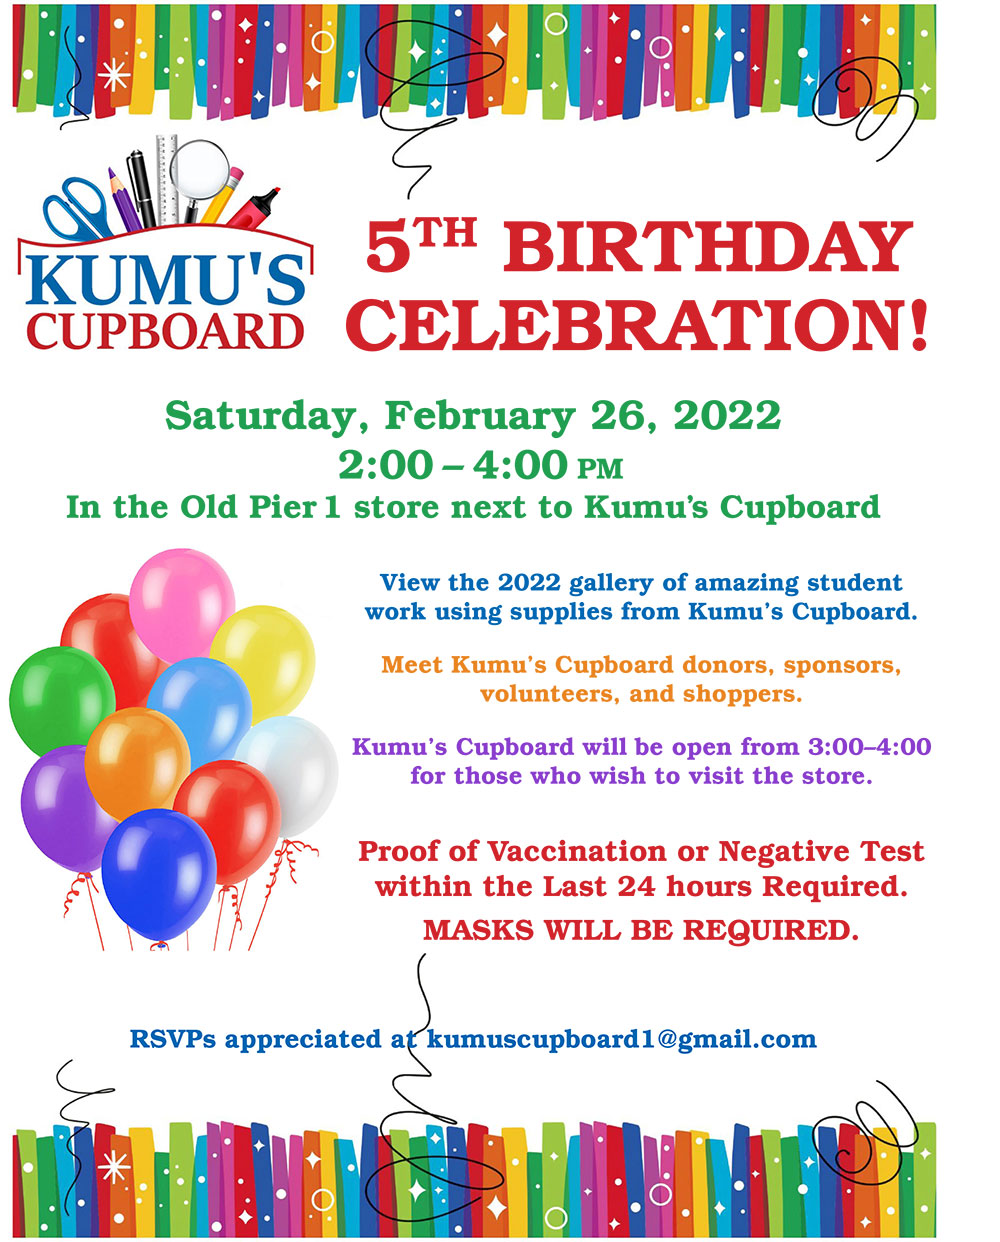 Kumu's Cupboard 5th Birthday Celebration